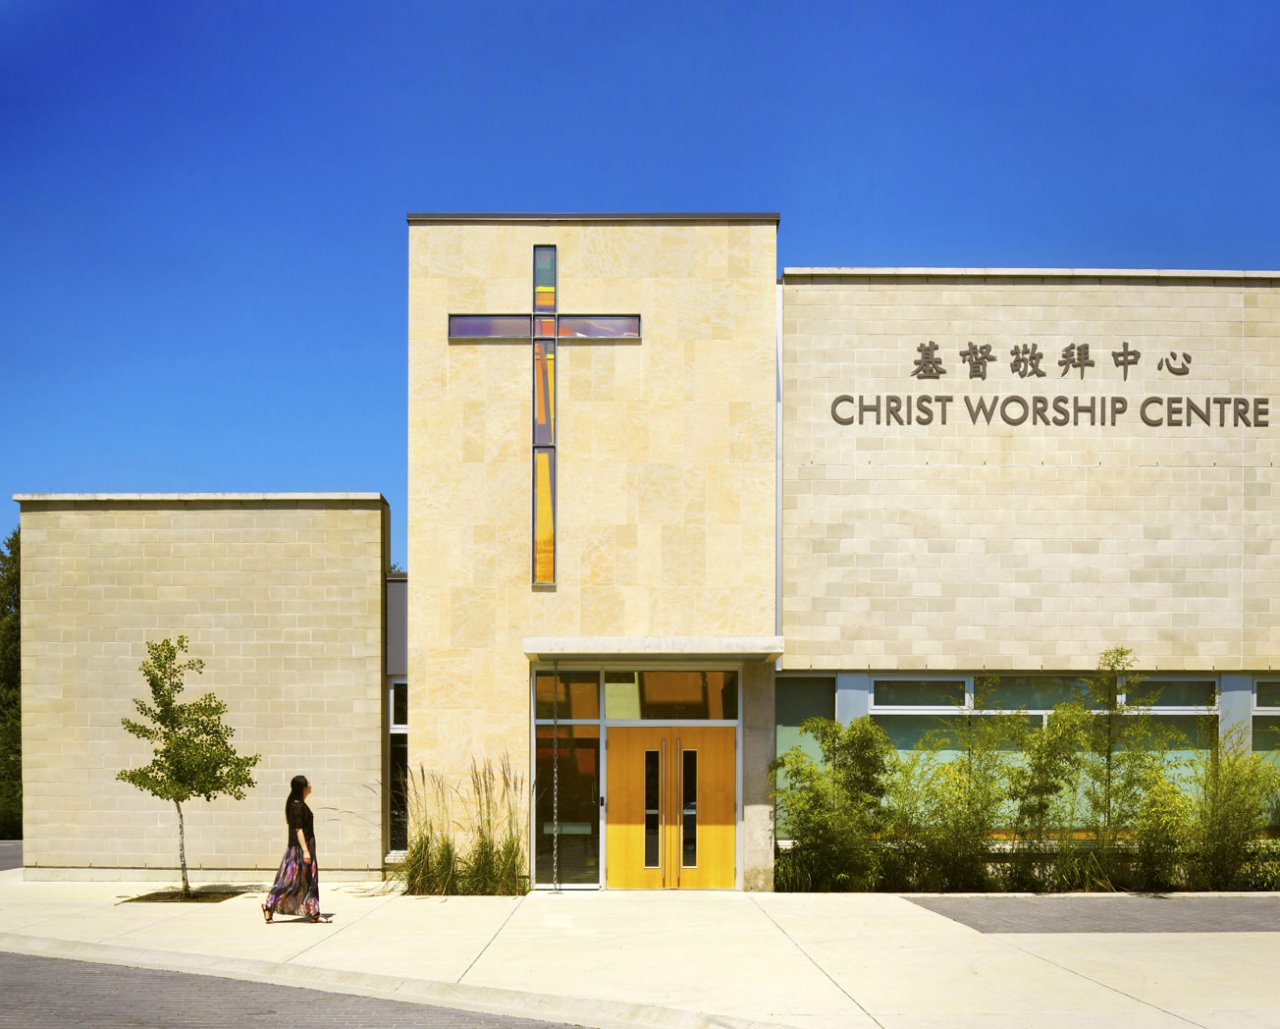 Christ Worship Centre